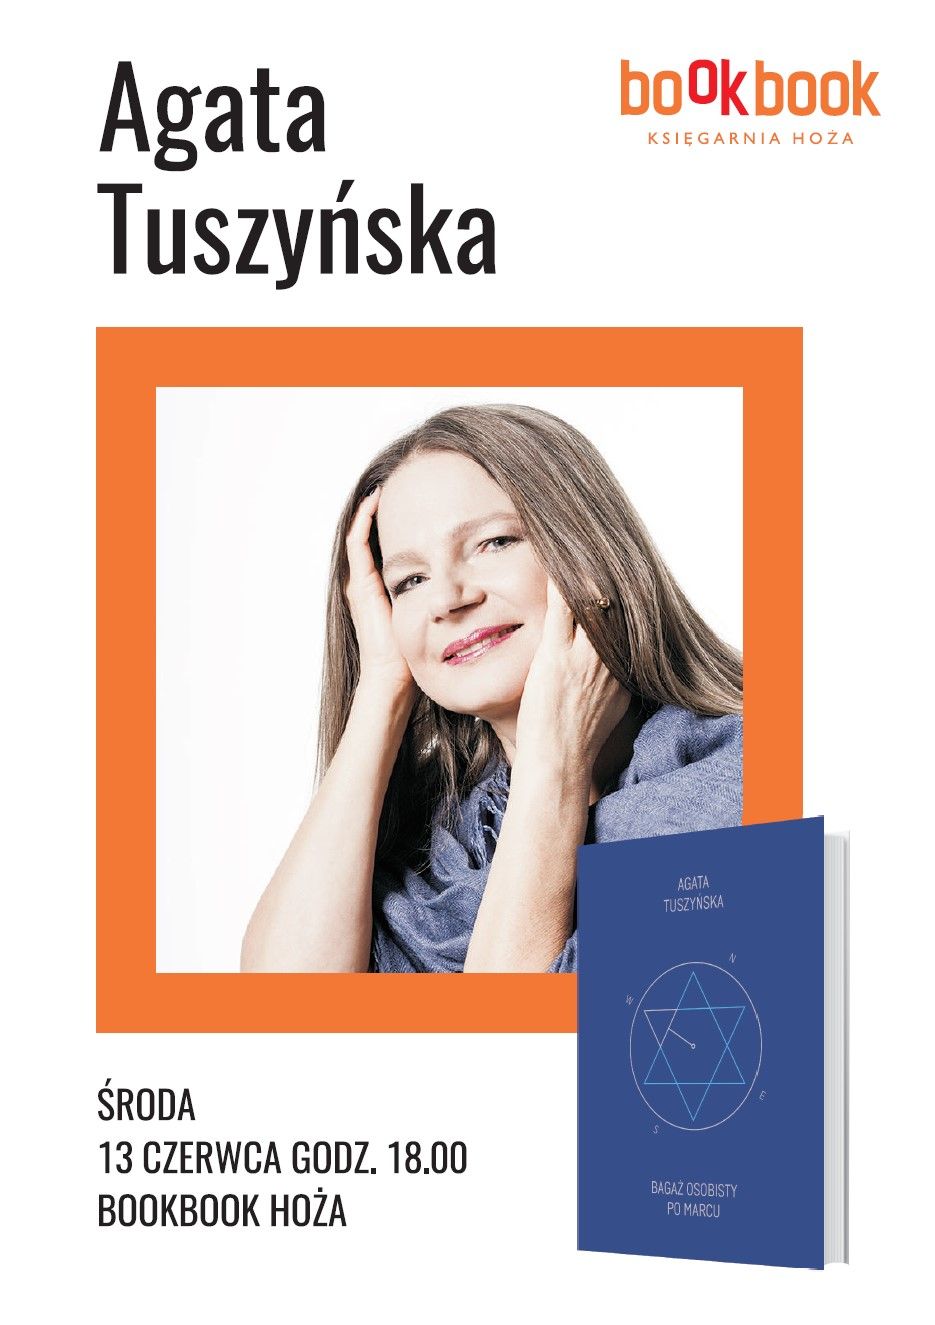 BookBook, Agata Tuszyńska 